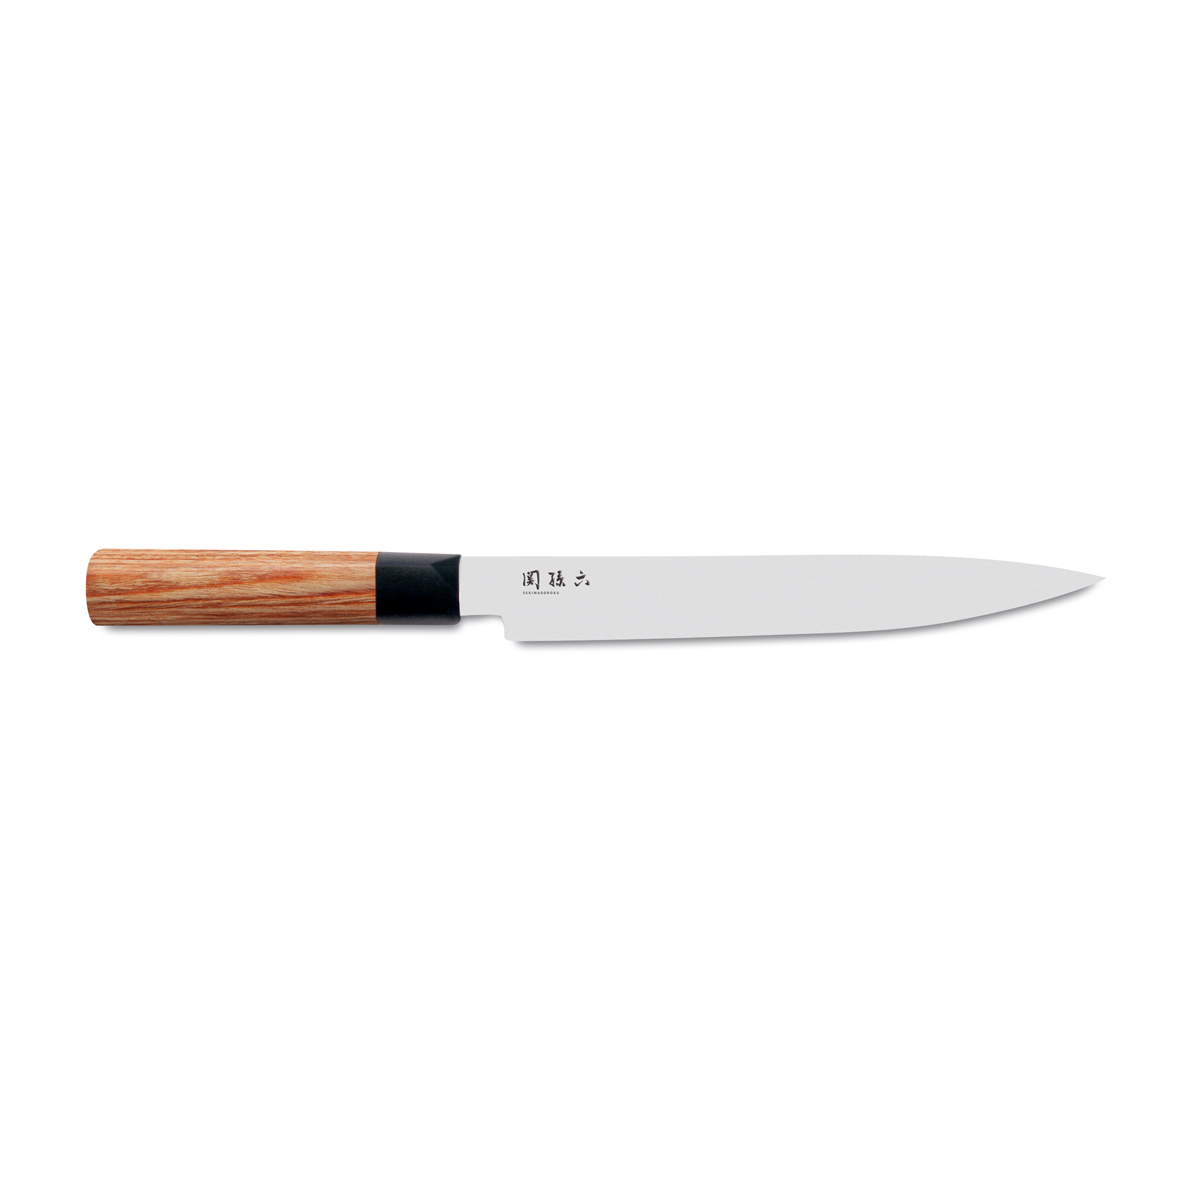 KAI Seki Magoroku Redwood Schinkenmesser 20 cm / Carbon 1K6 Edelstahl mit Pakkaholz-Griff